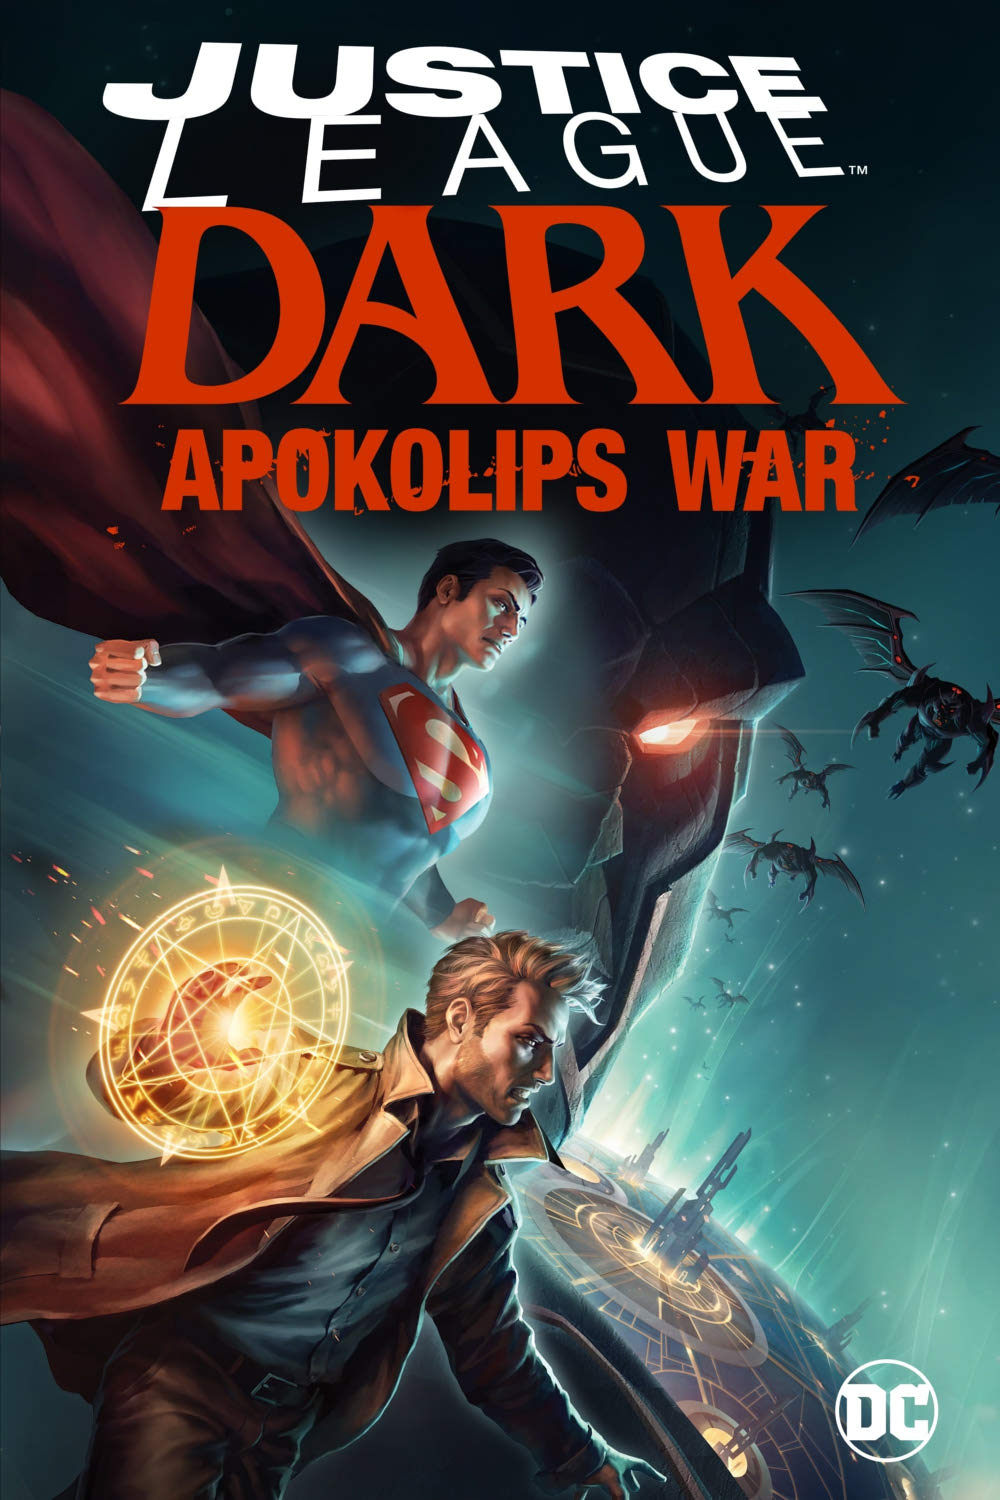 Justice League Dark: Apokolips War [Sub-ITA] [HD] (2020)